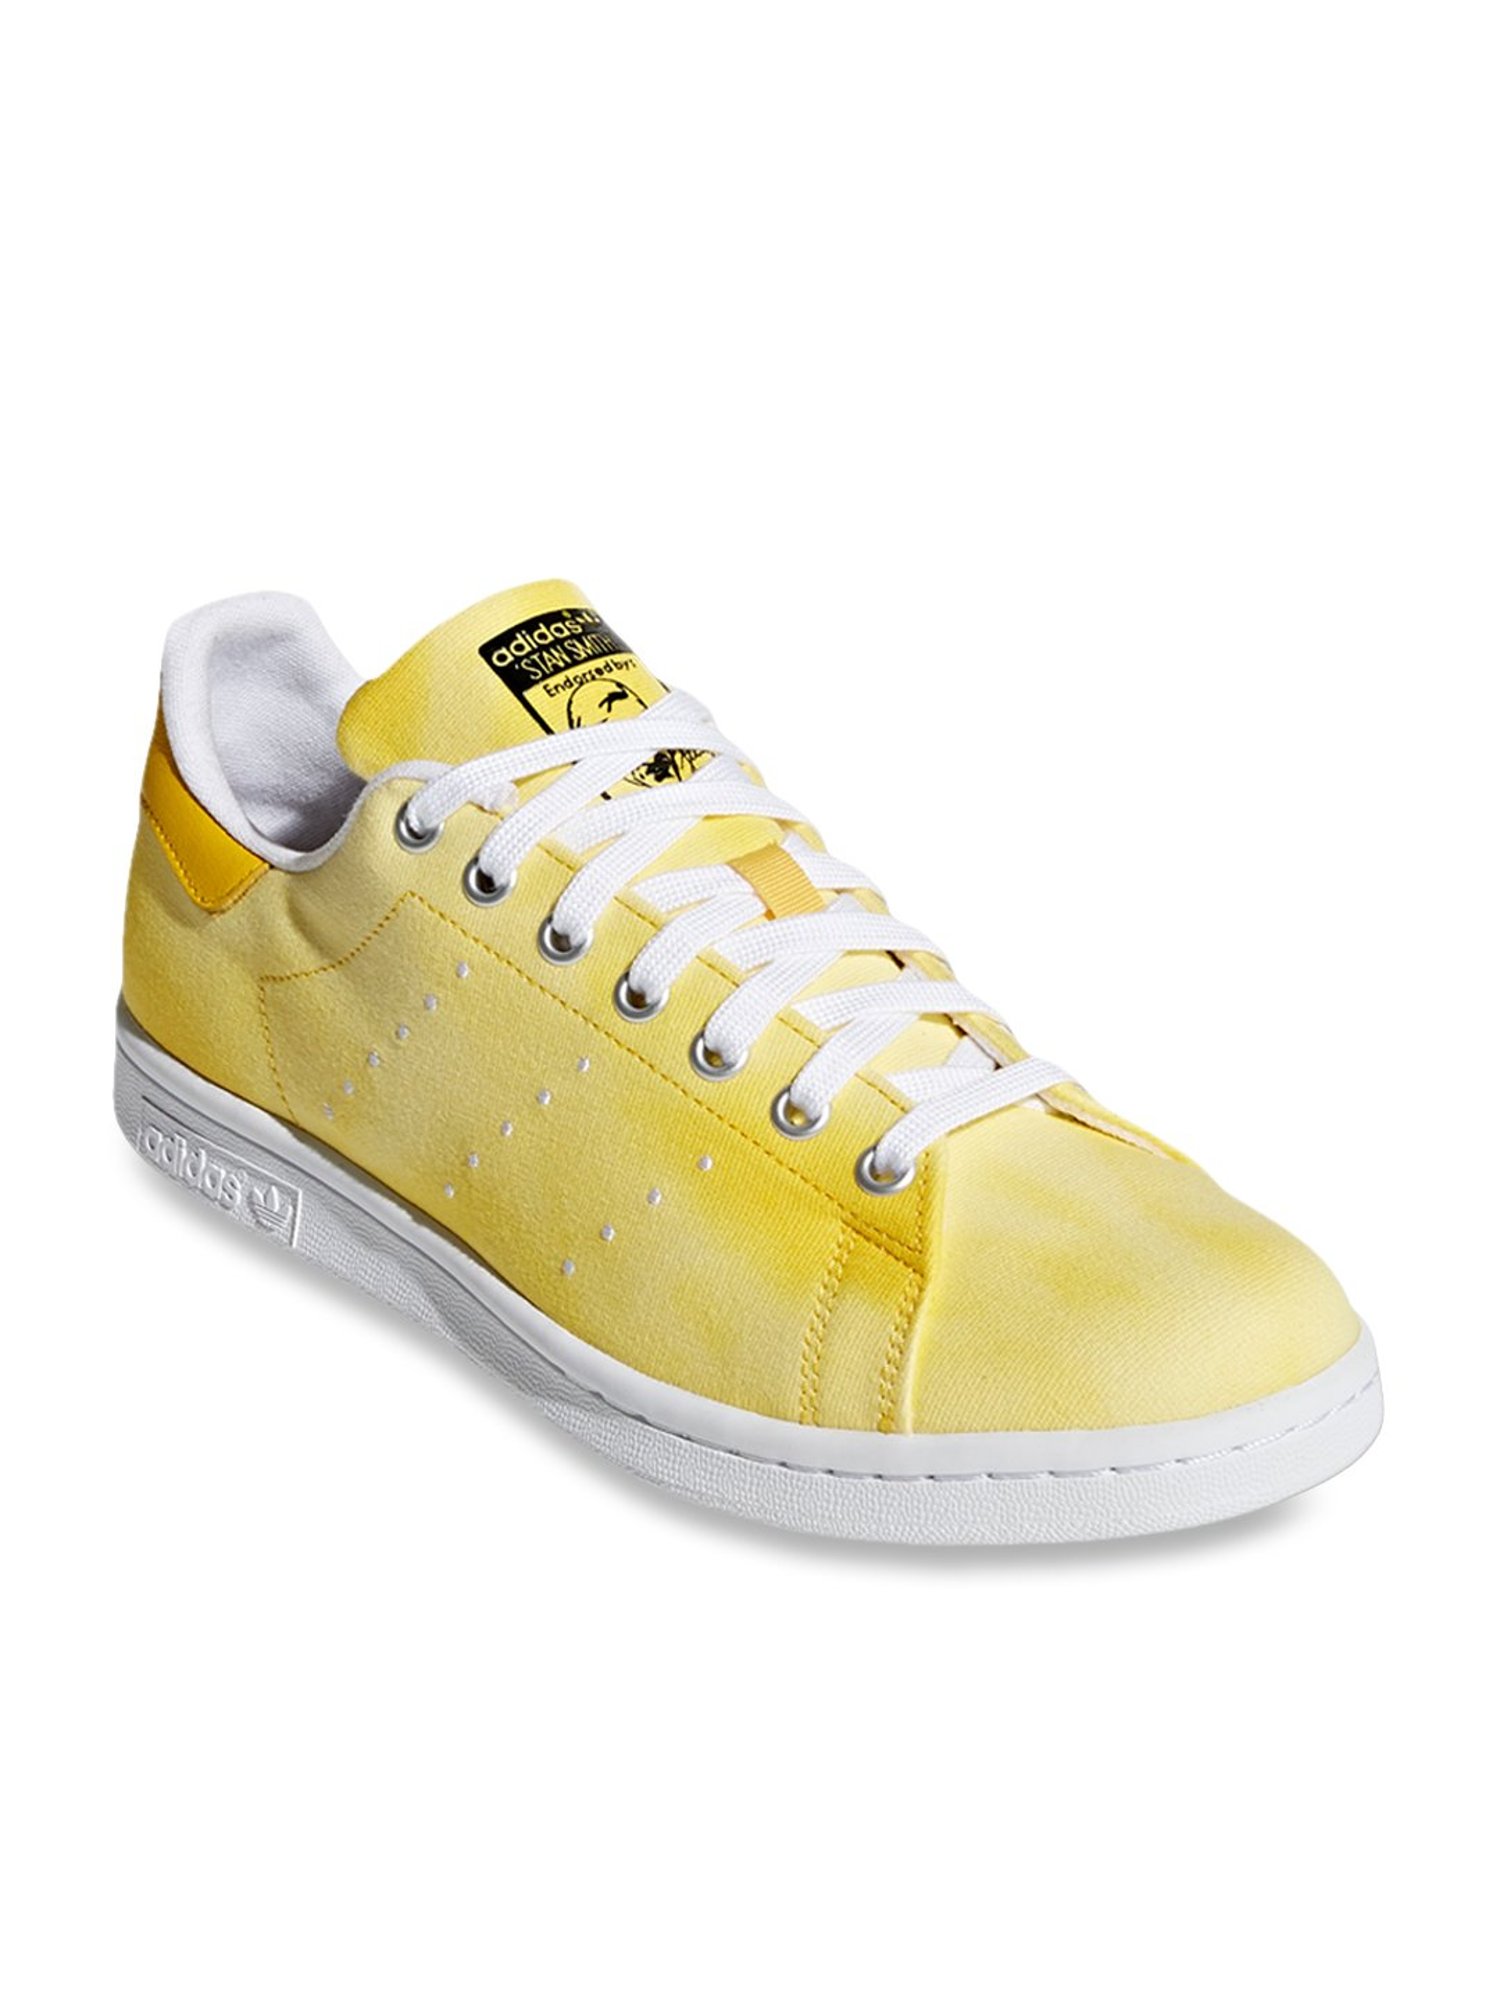 Buy Originals PW HU Stan Smith Yellow Sneakers for Men at Best Price @ Tata CLiQ